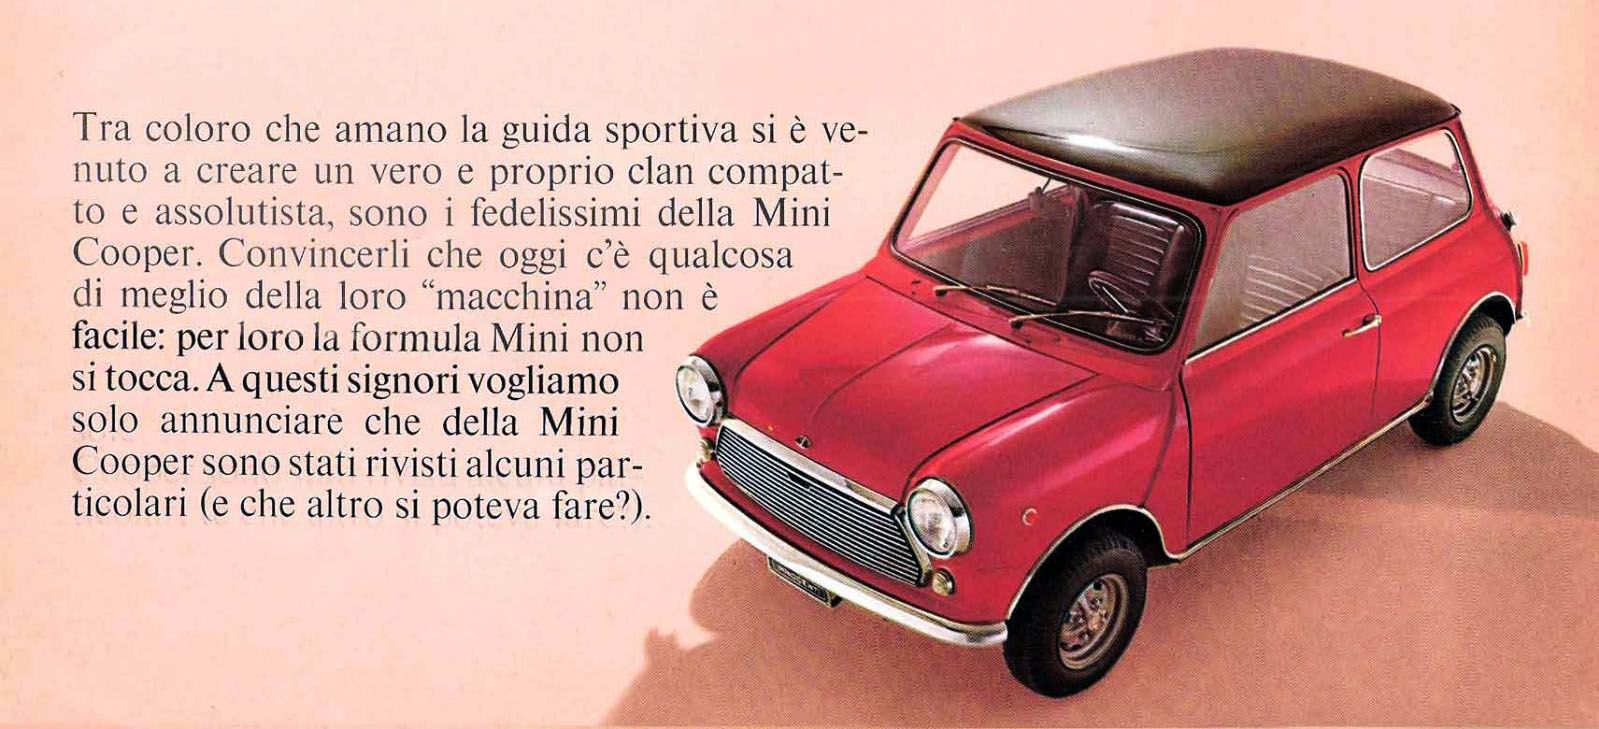 Una Innocenti Mini Cooper MK3 rossa